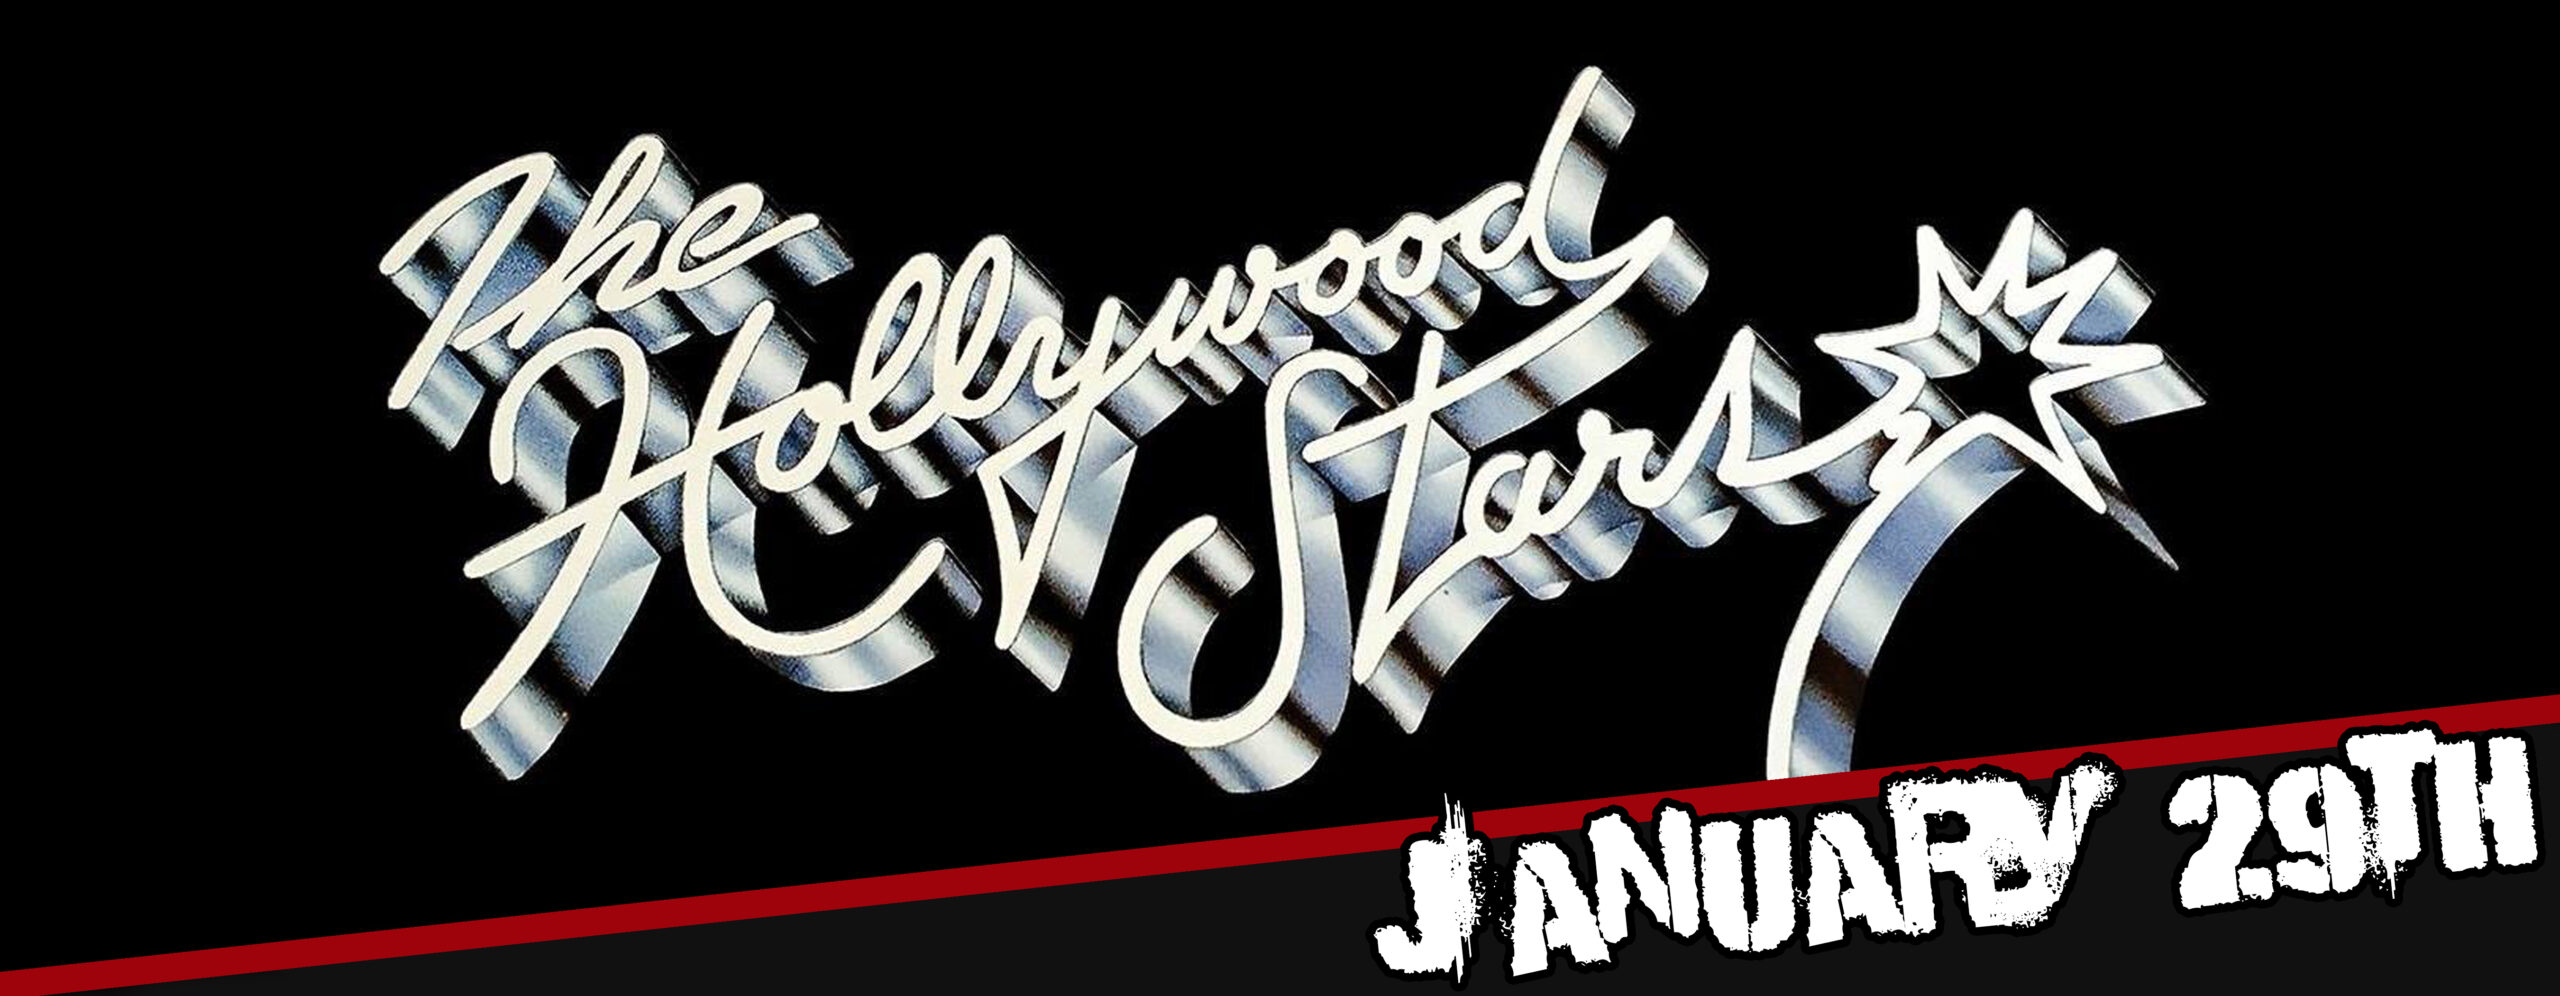 HollywoodStars_nick